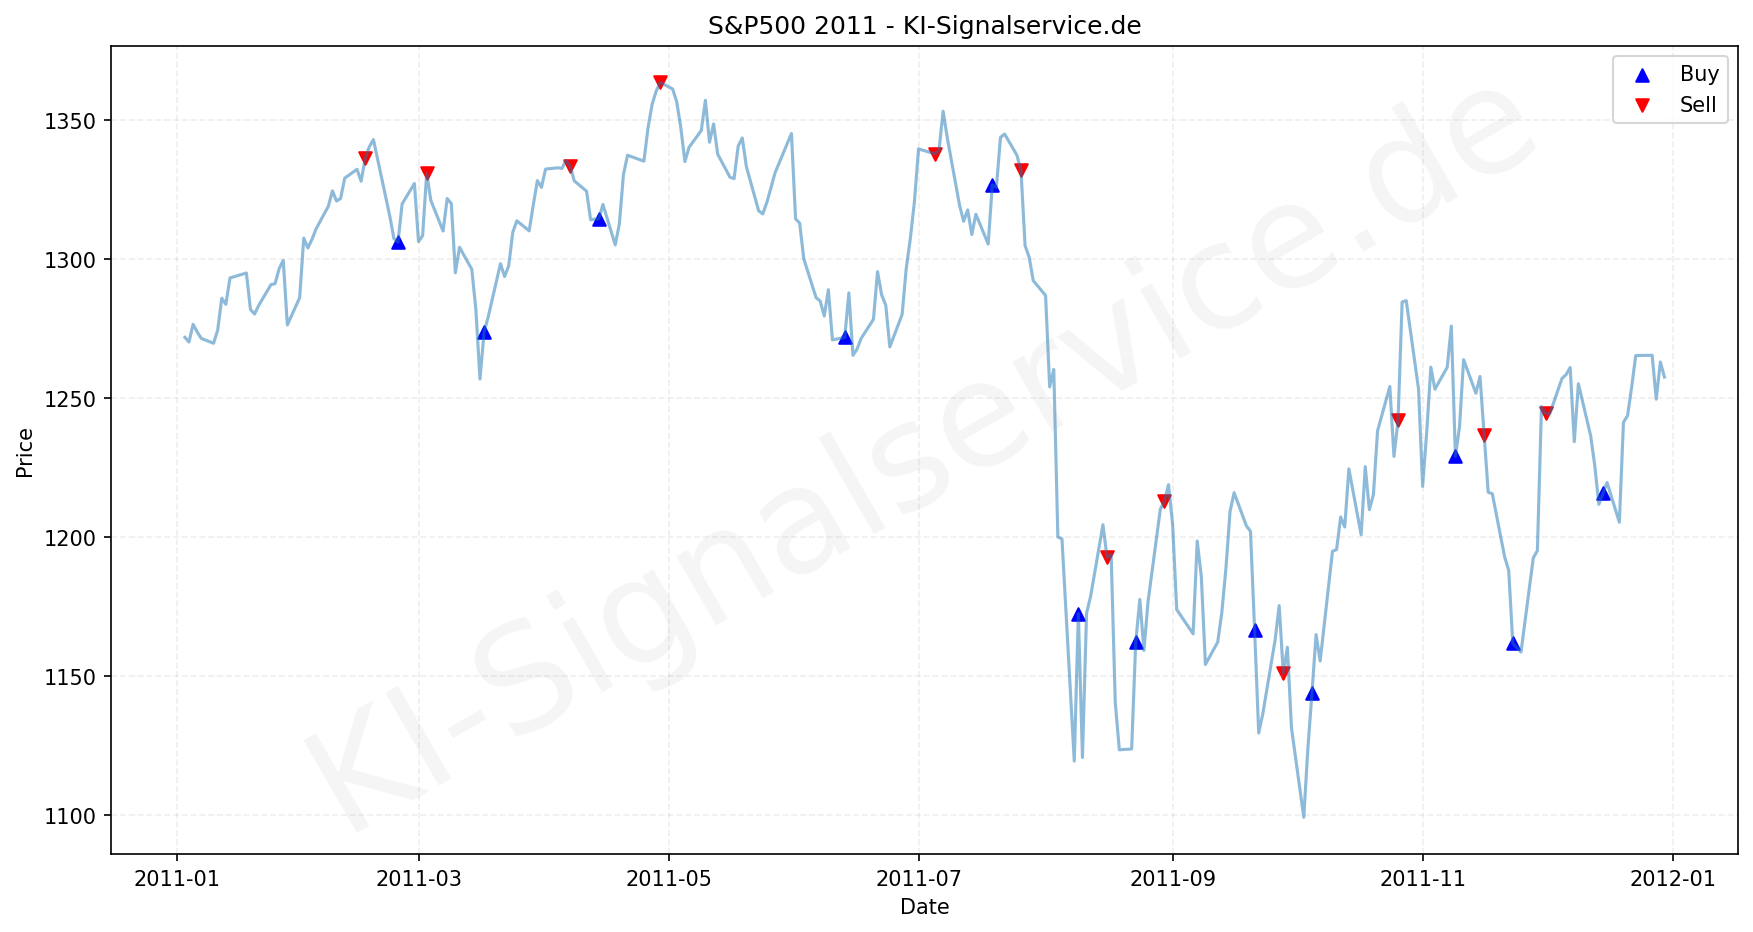 SP500 Index Performance Chart - KI Tradingsignale 2011